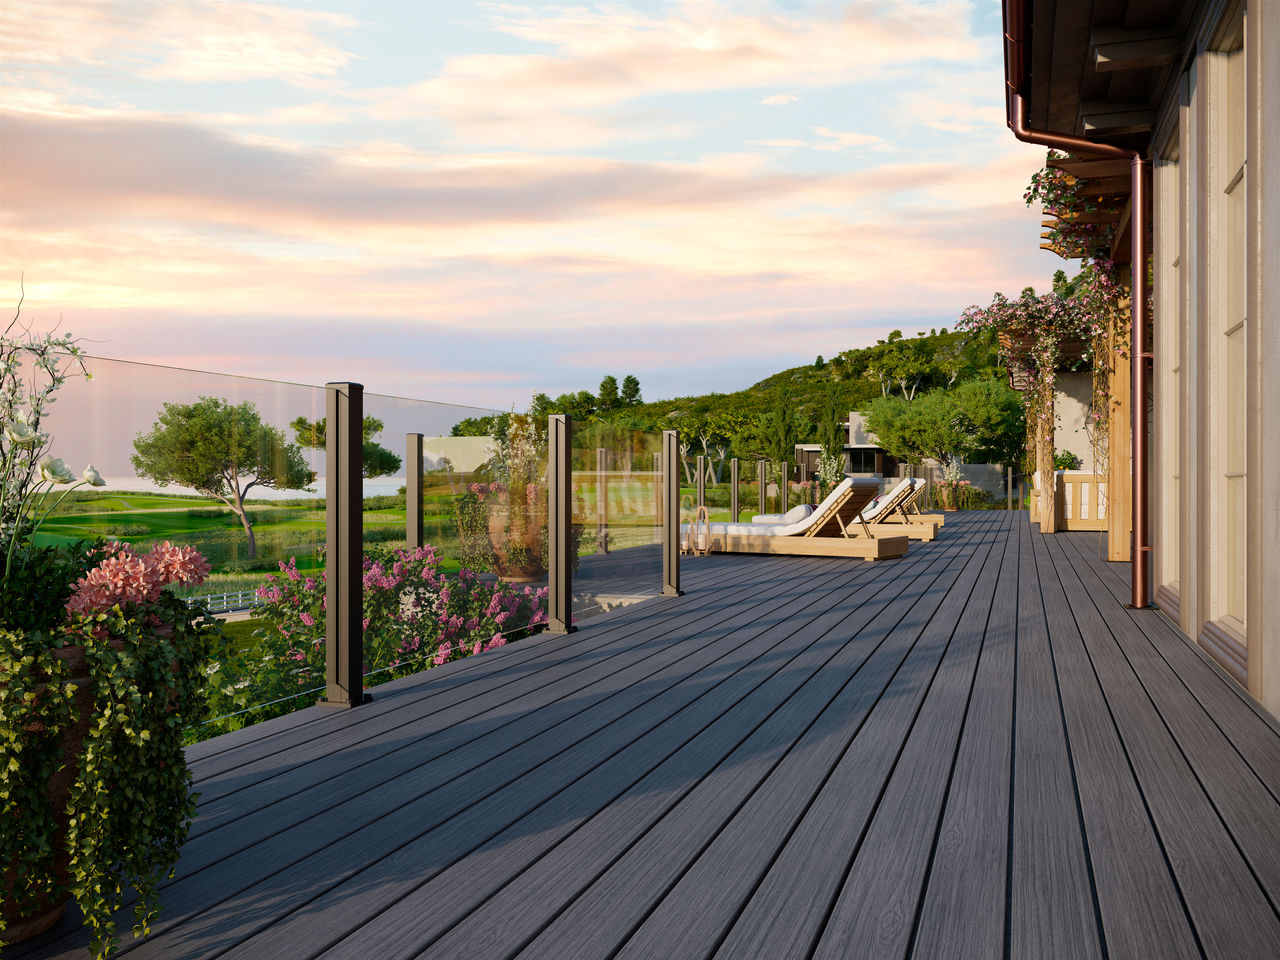 Trex frameless glass rail on a composite Trex deck overlooking a beautiful lawn at sunset.